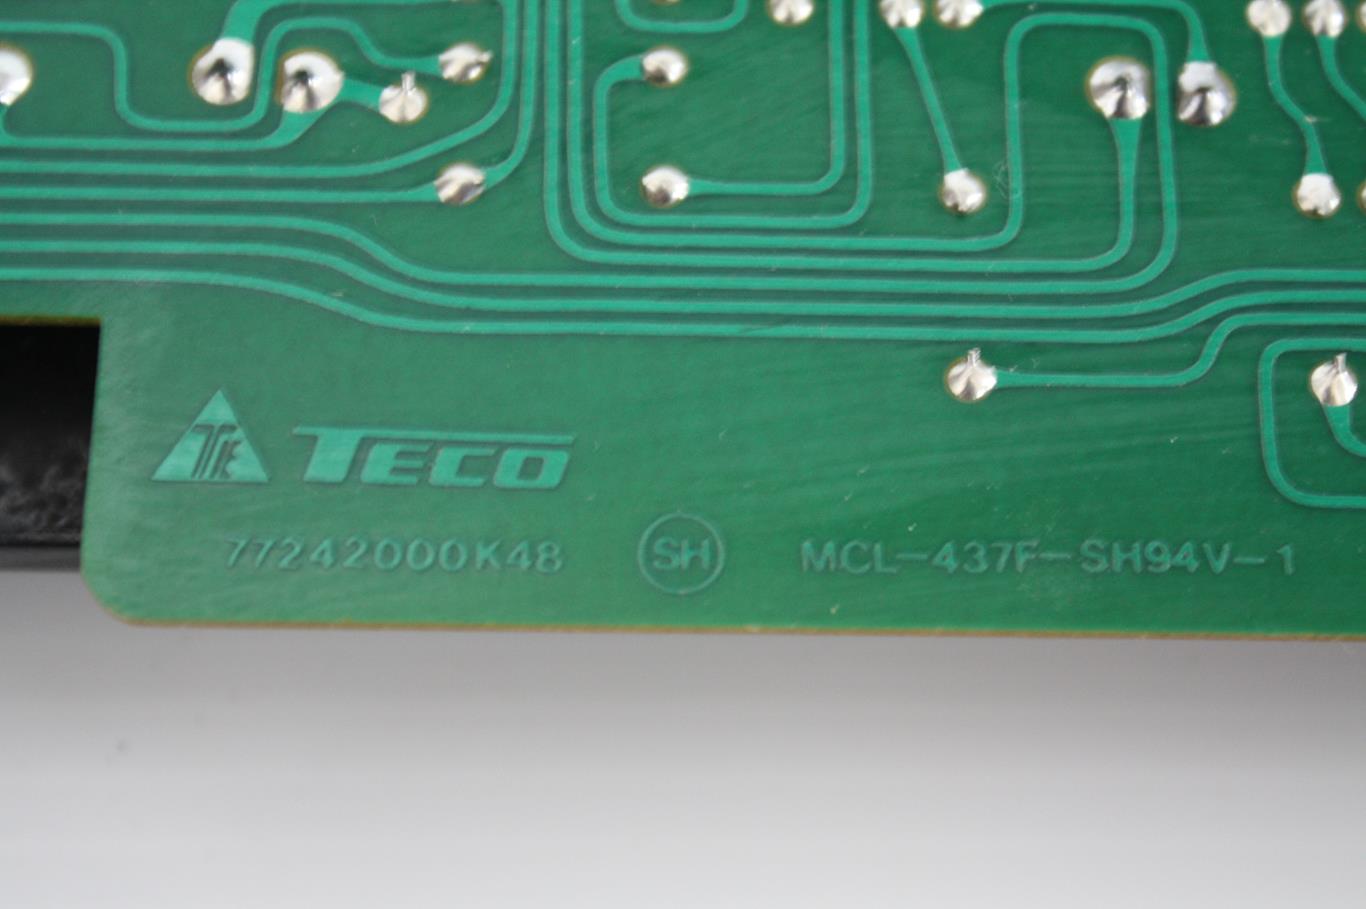 Lear Siegler ADM22 - Teco board branding